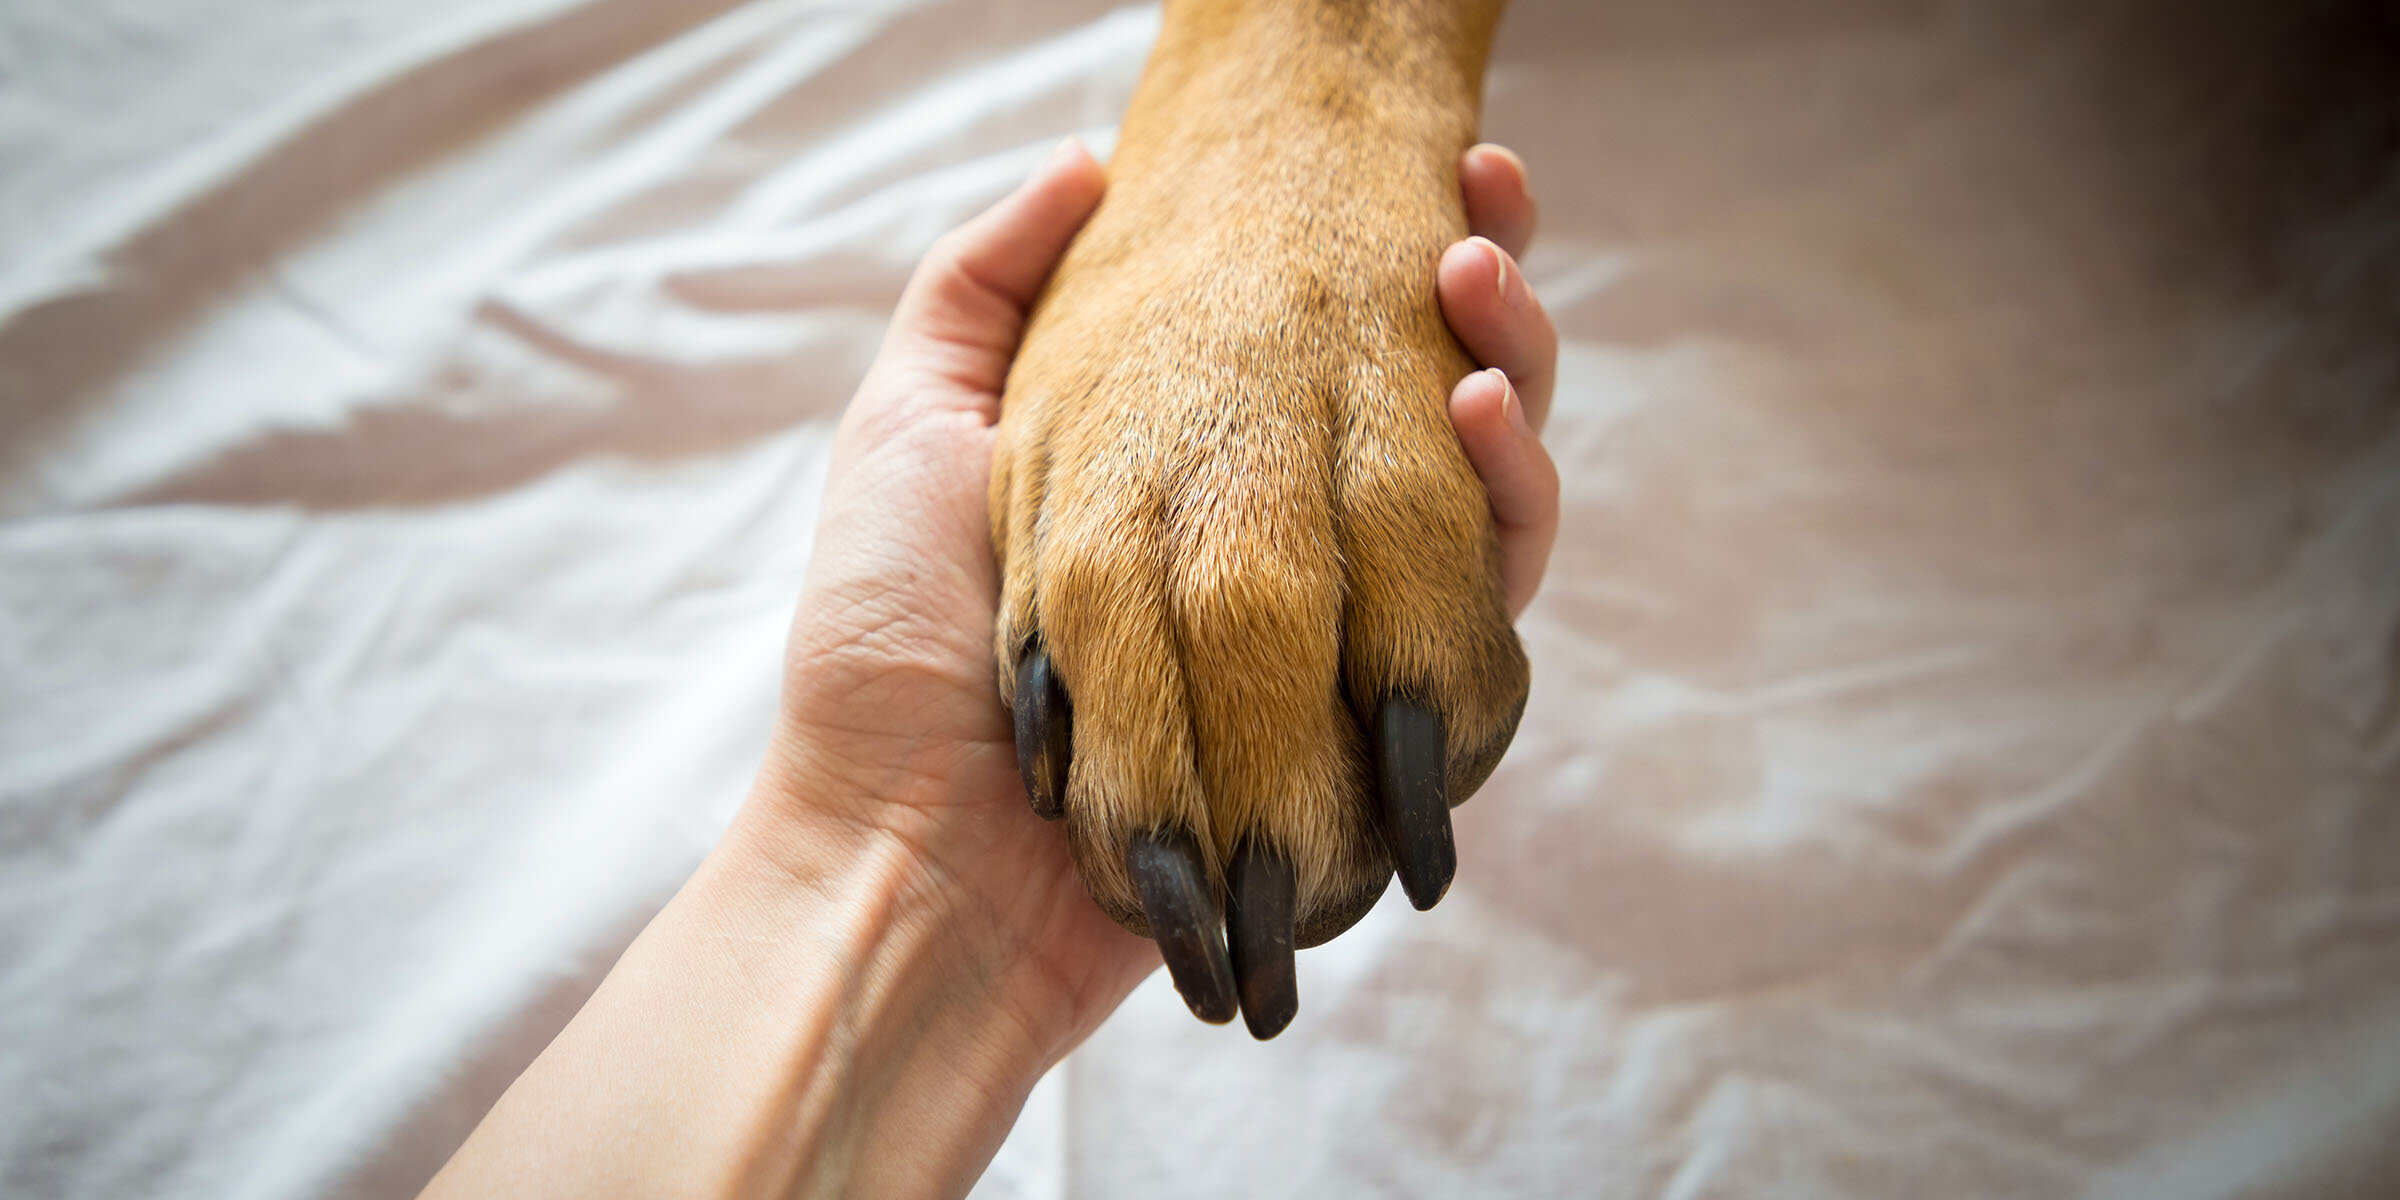 Feet dog. Лапа собаки. Рука и собачья лапа. Собачья лапка и рука человека. Рука и лапа собаки.